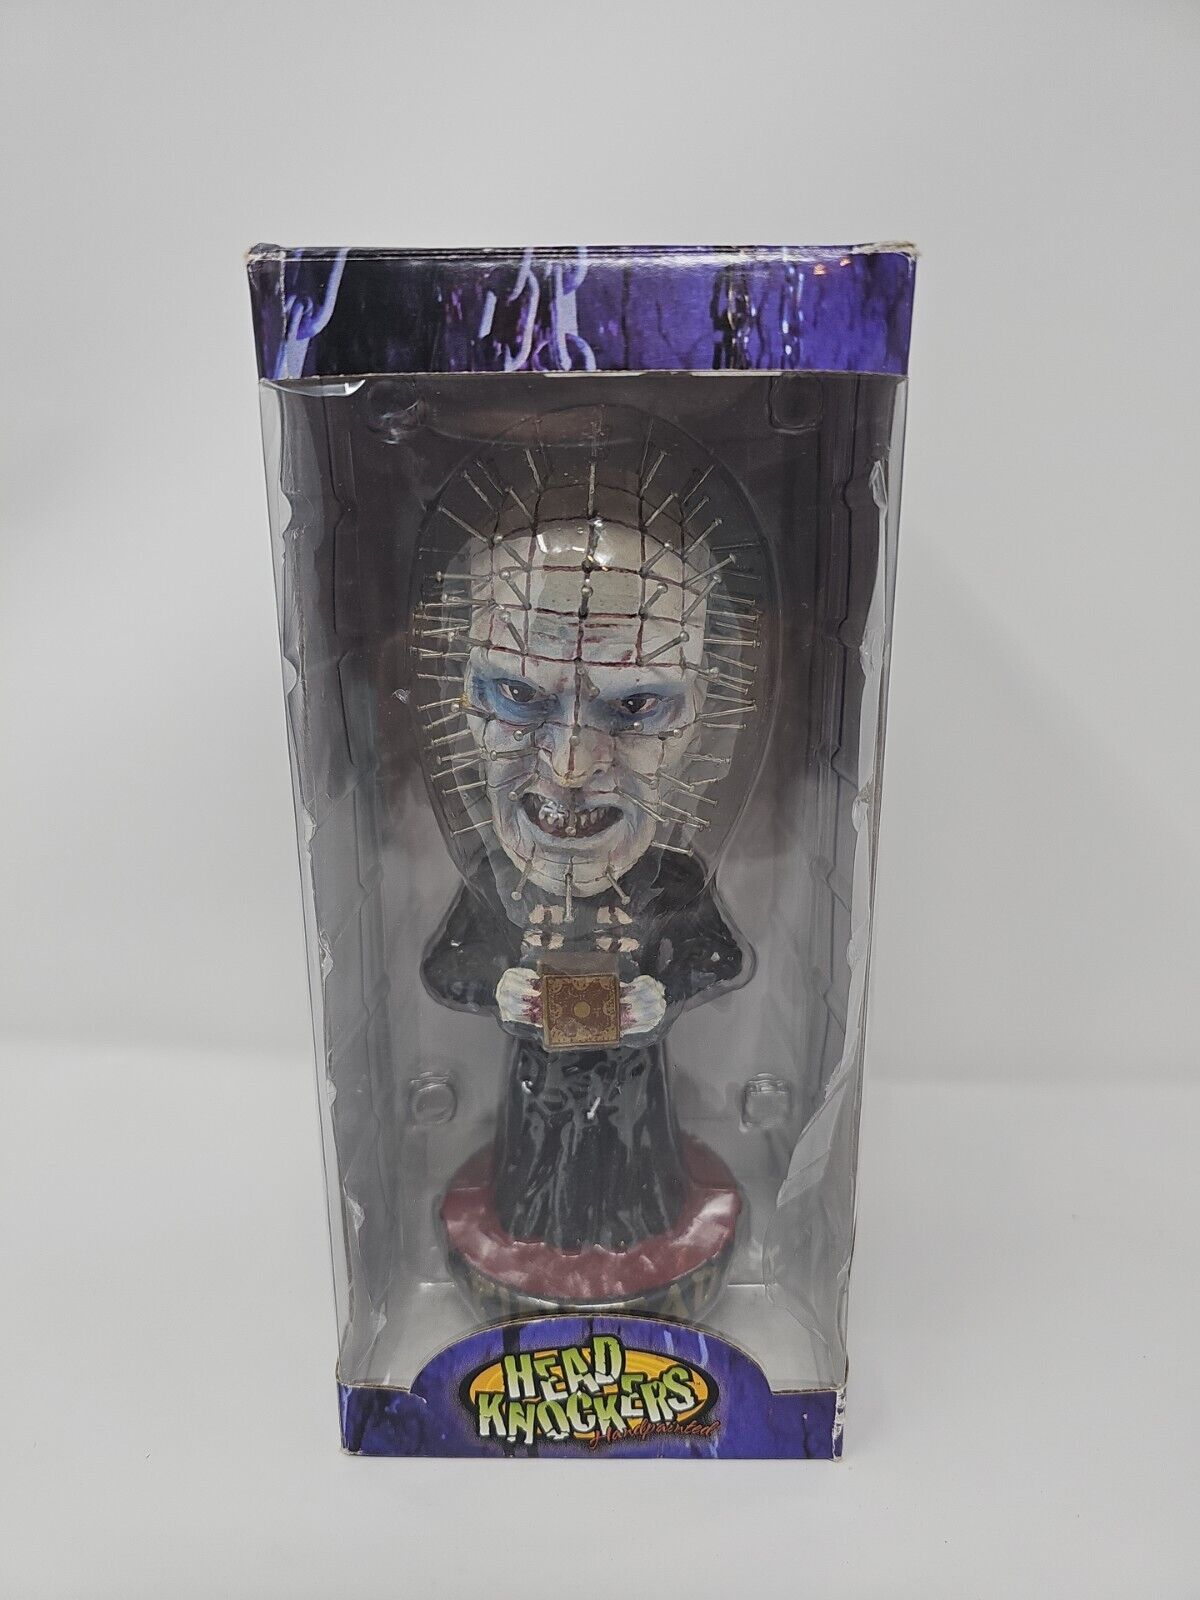 MIB NECA 8” Head Knockers Pinhead Bobble Head Figure Hellraiser Horror 2003